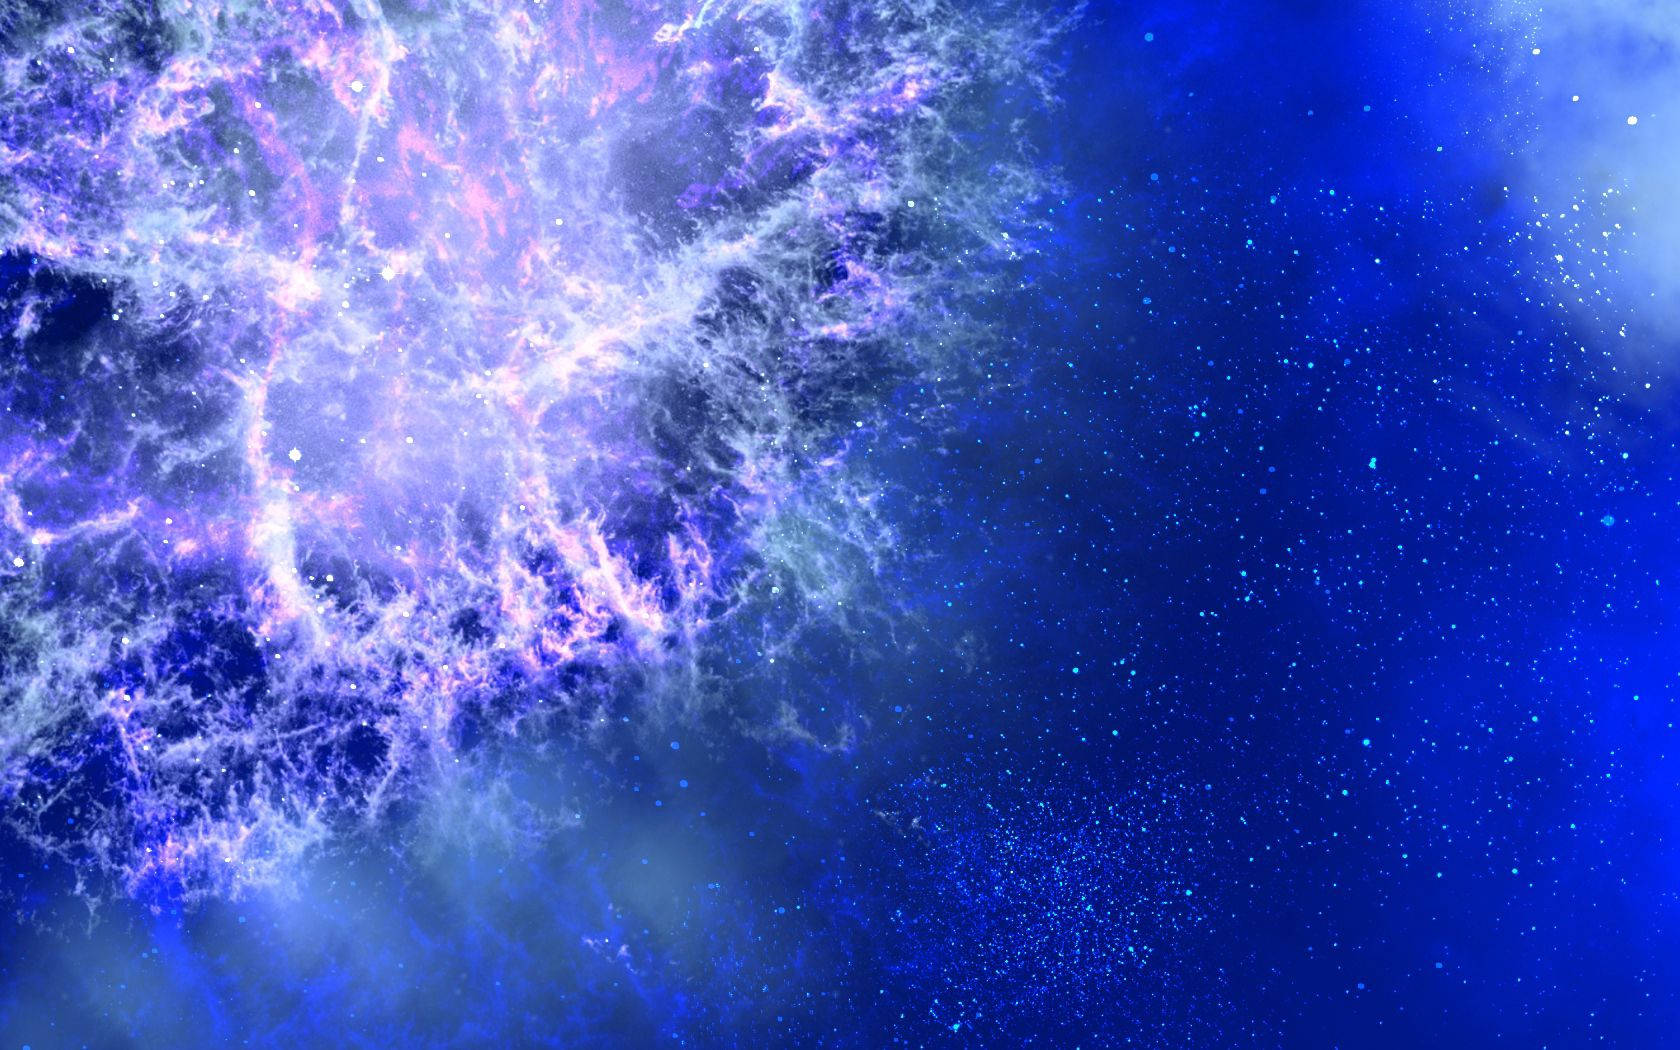 A Blue And Purple Space With A Nebula